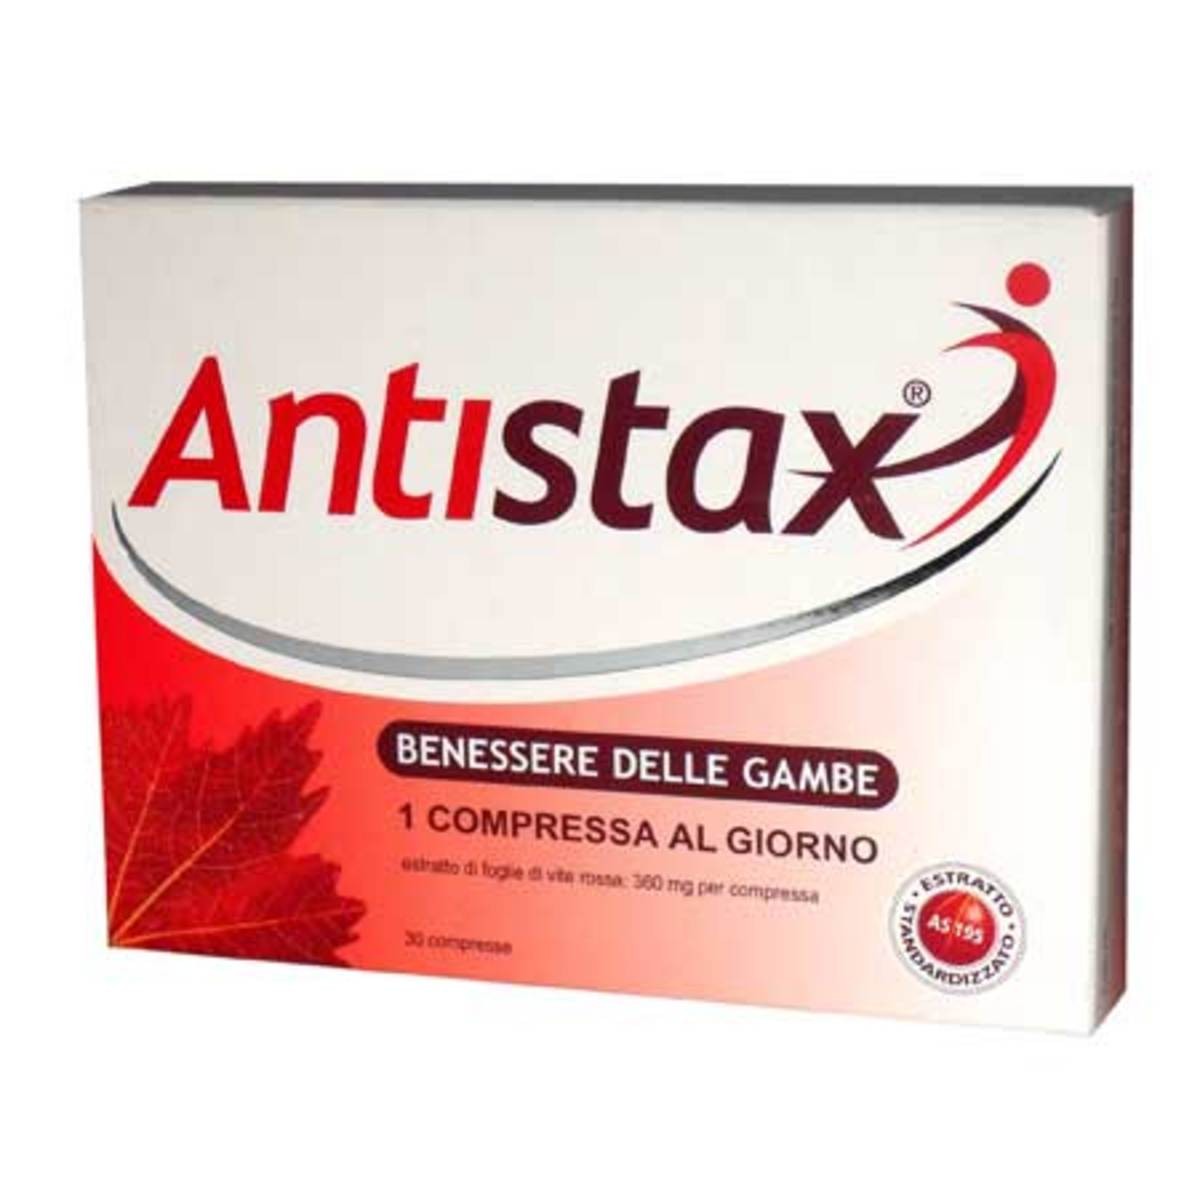 Integratore Antistax